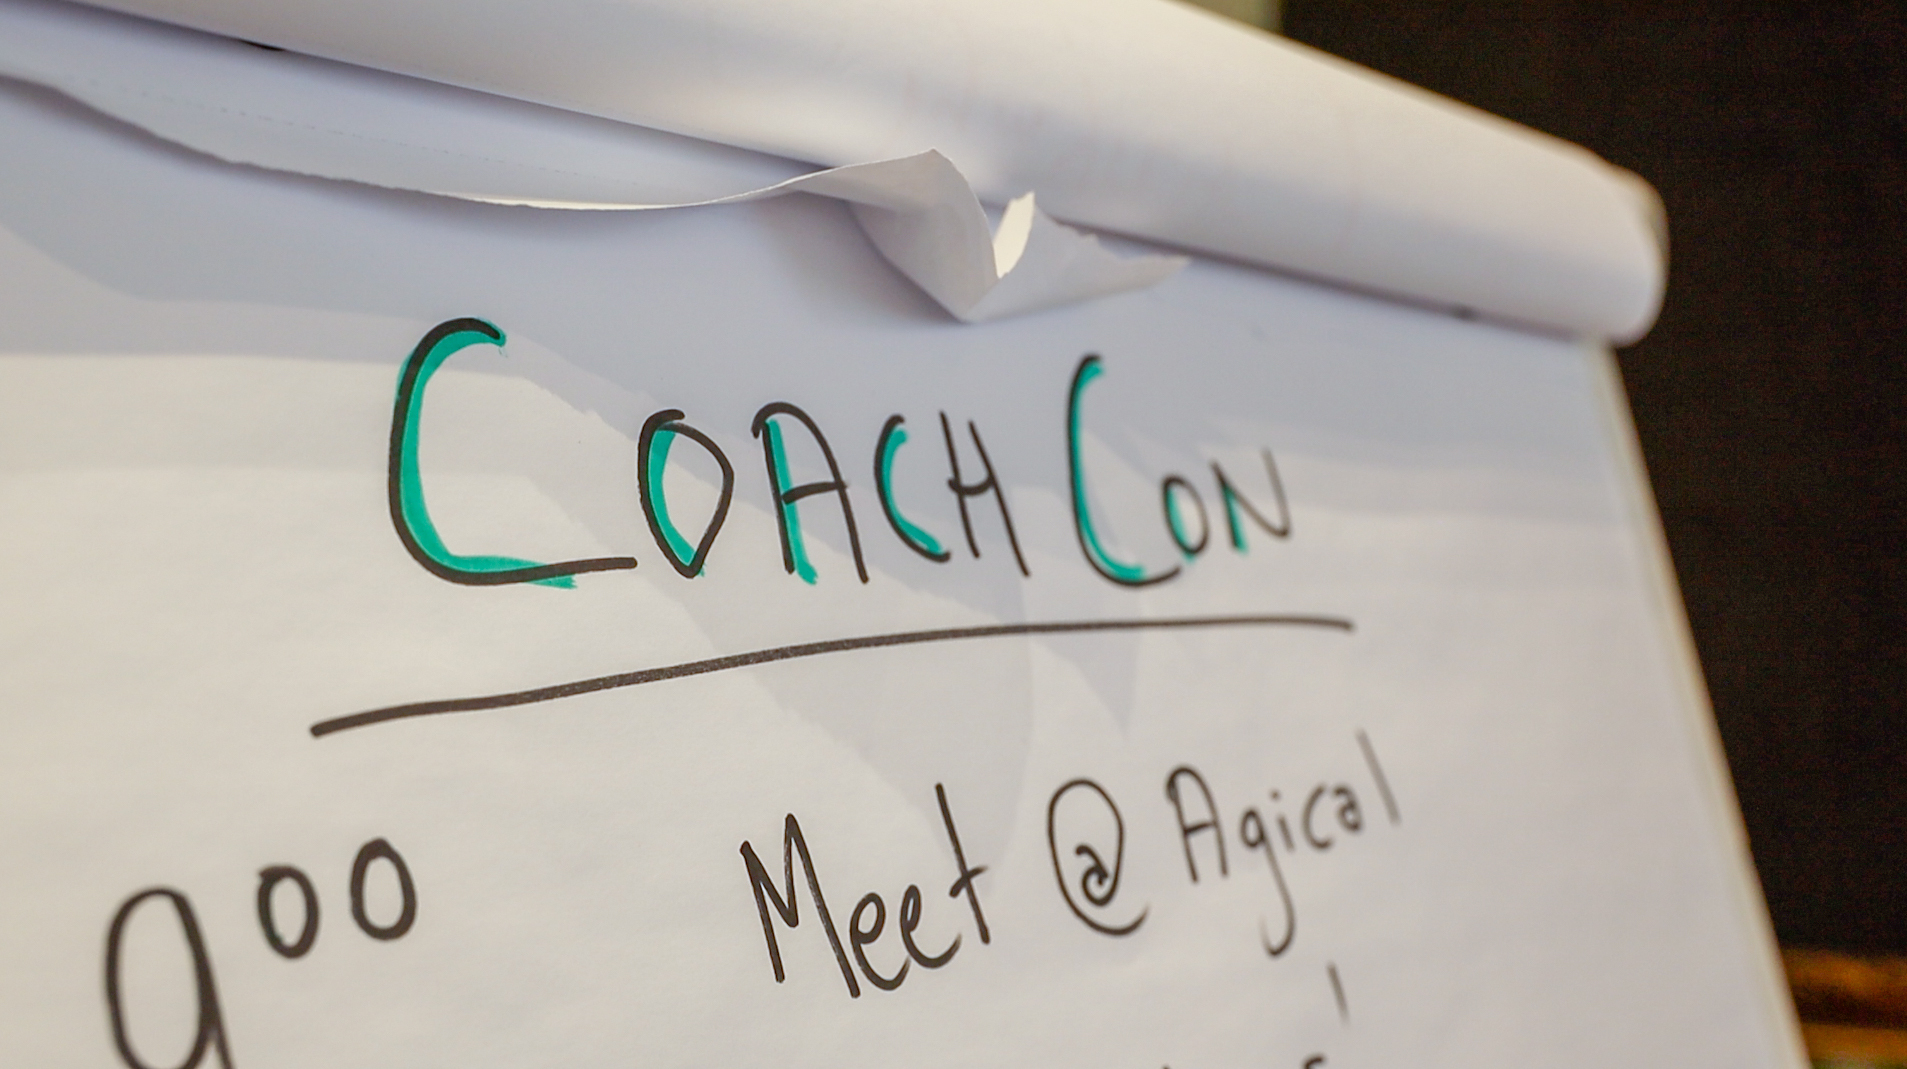 CoachCon agenda